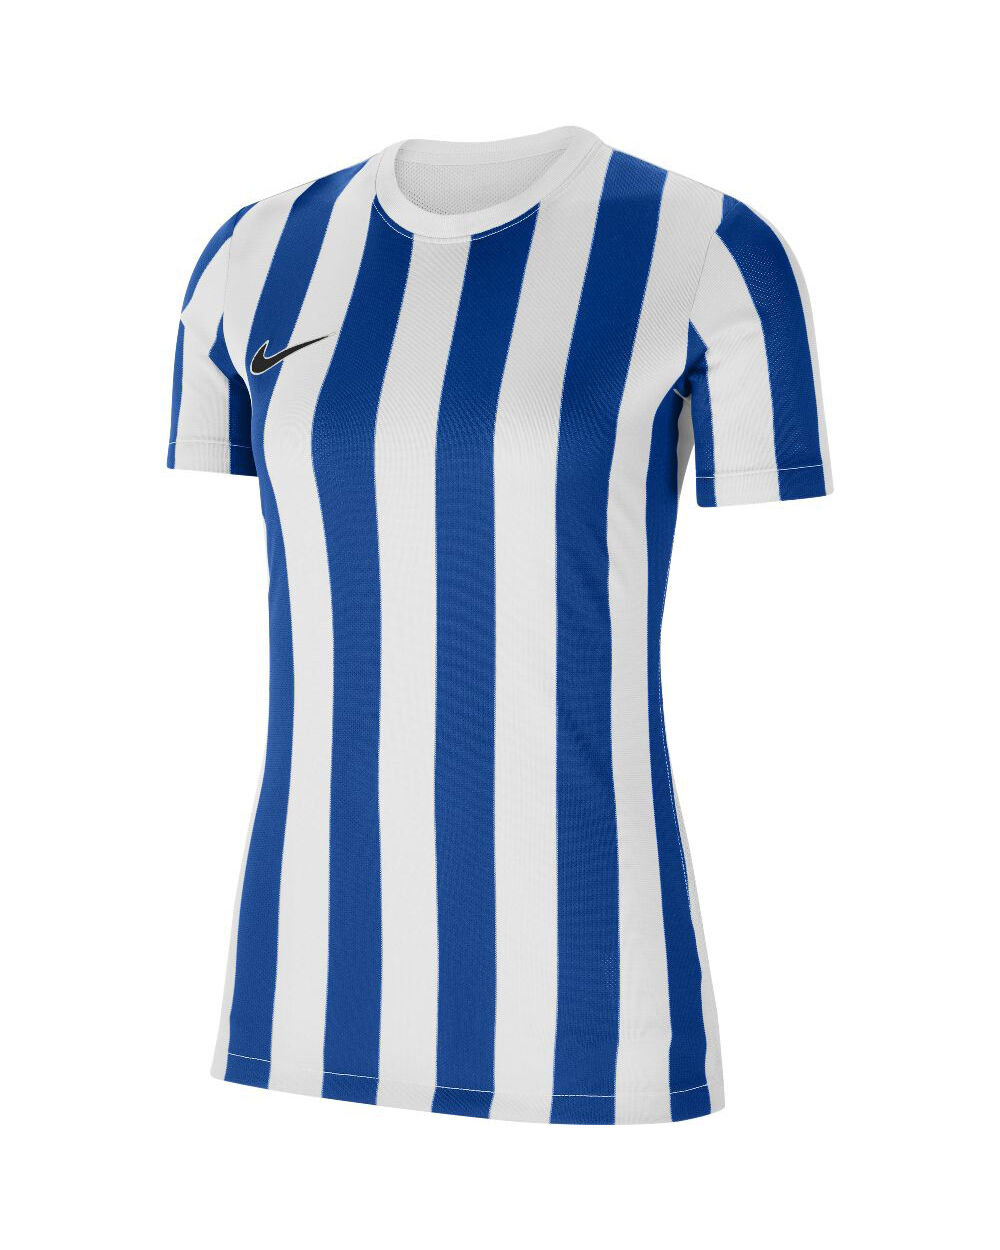 Nike Maglia Striped Division IV Blu Bianco e Reale per Donne CW3816-102 M